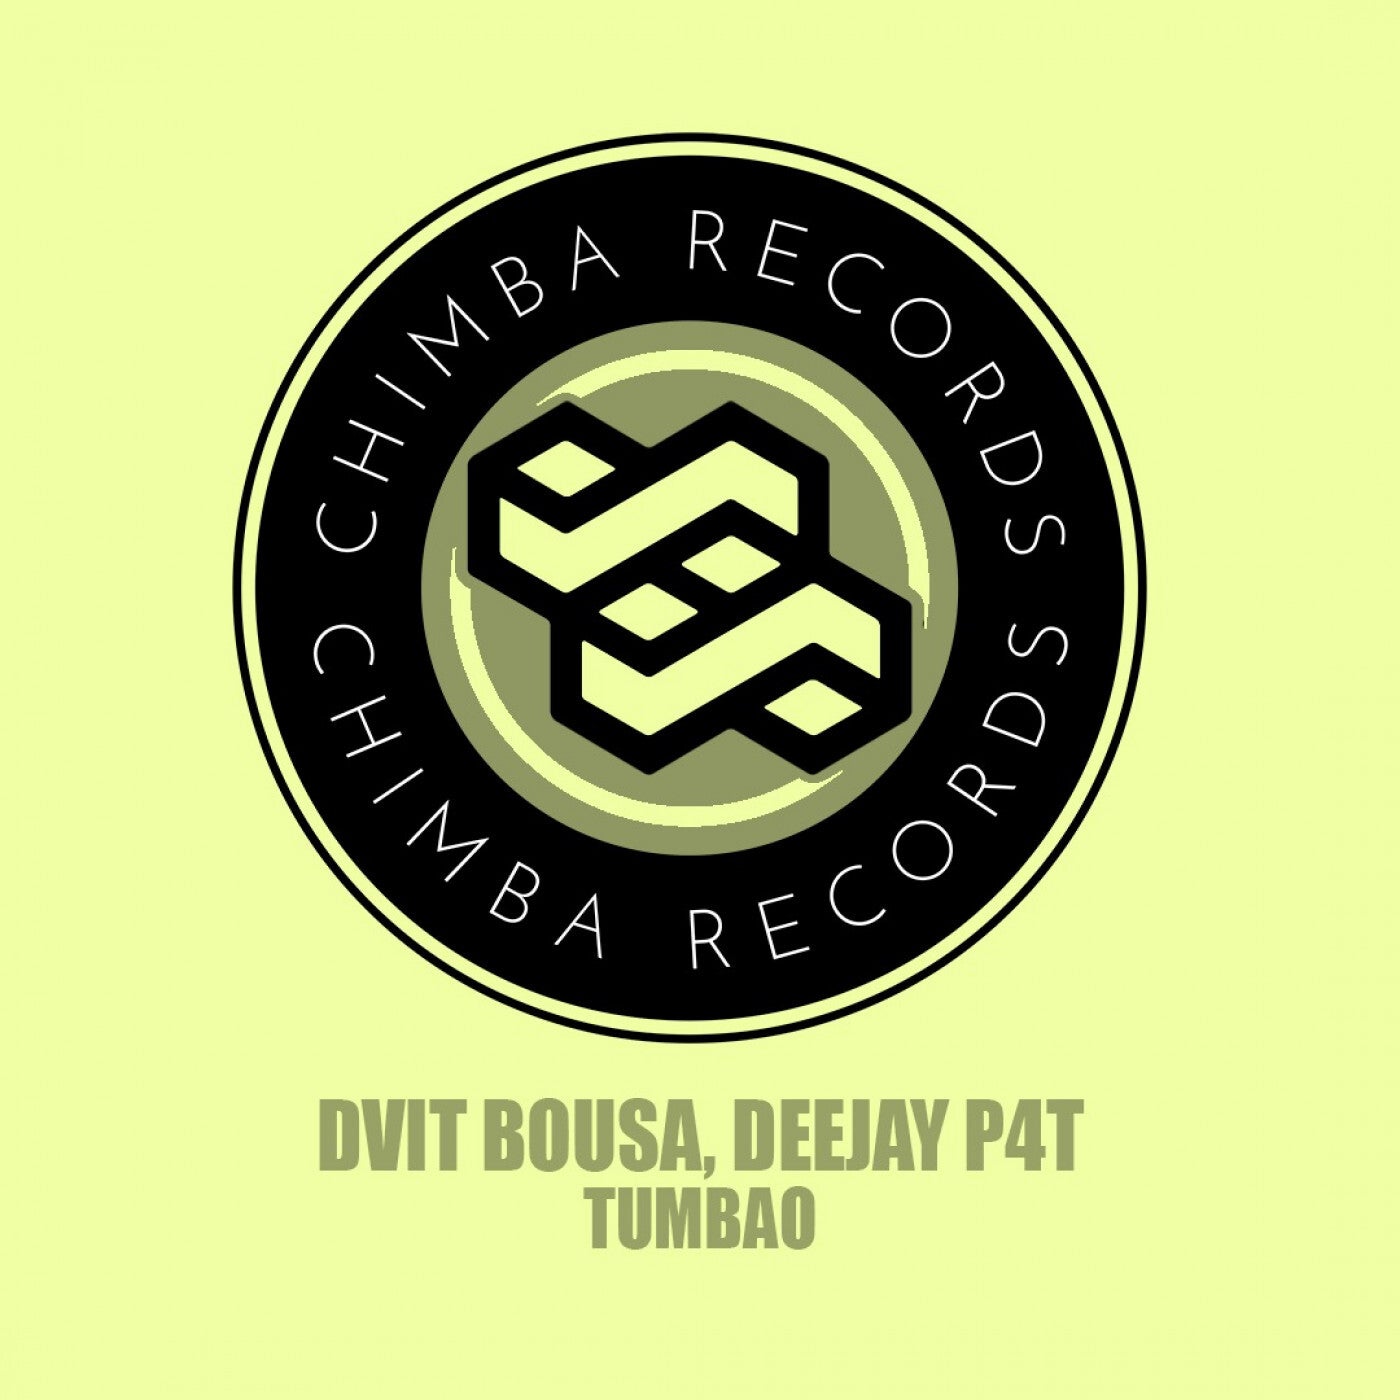 El Tumbao by Dvit Bousa and Deejay P4T on Beatsource